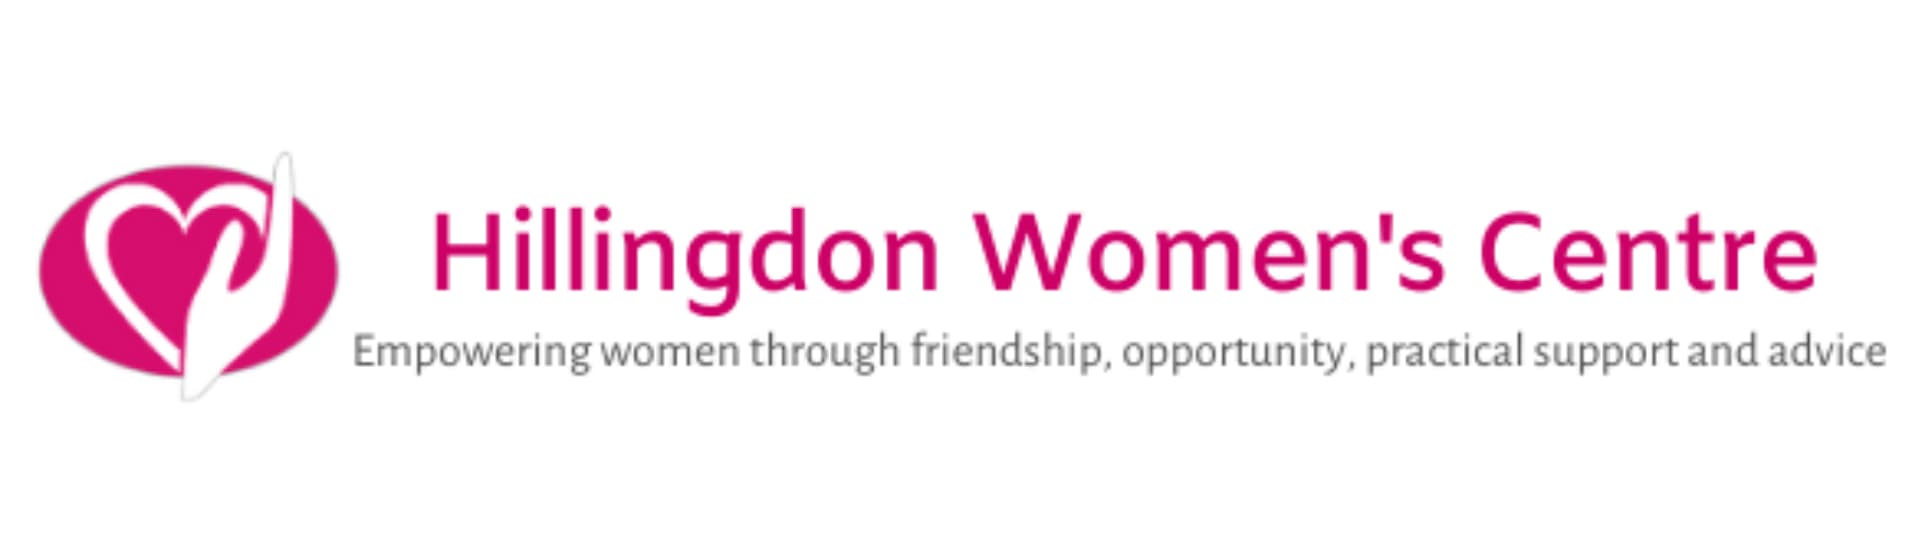 Spotlight on Hillingdon Women's Centre (HWC)